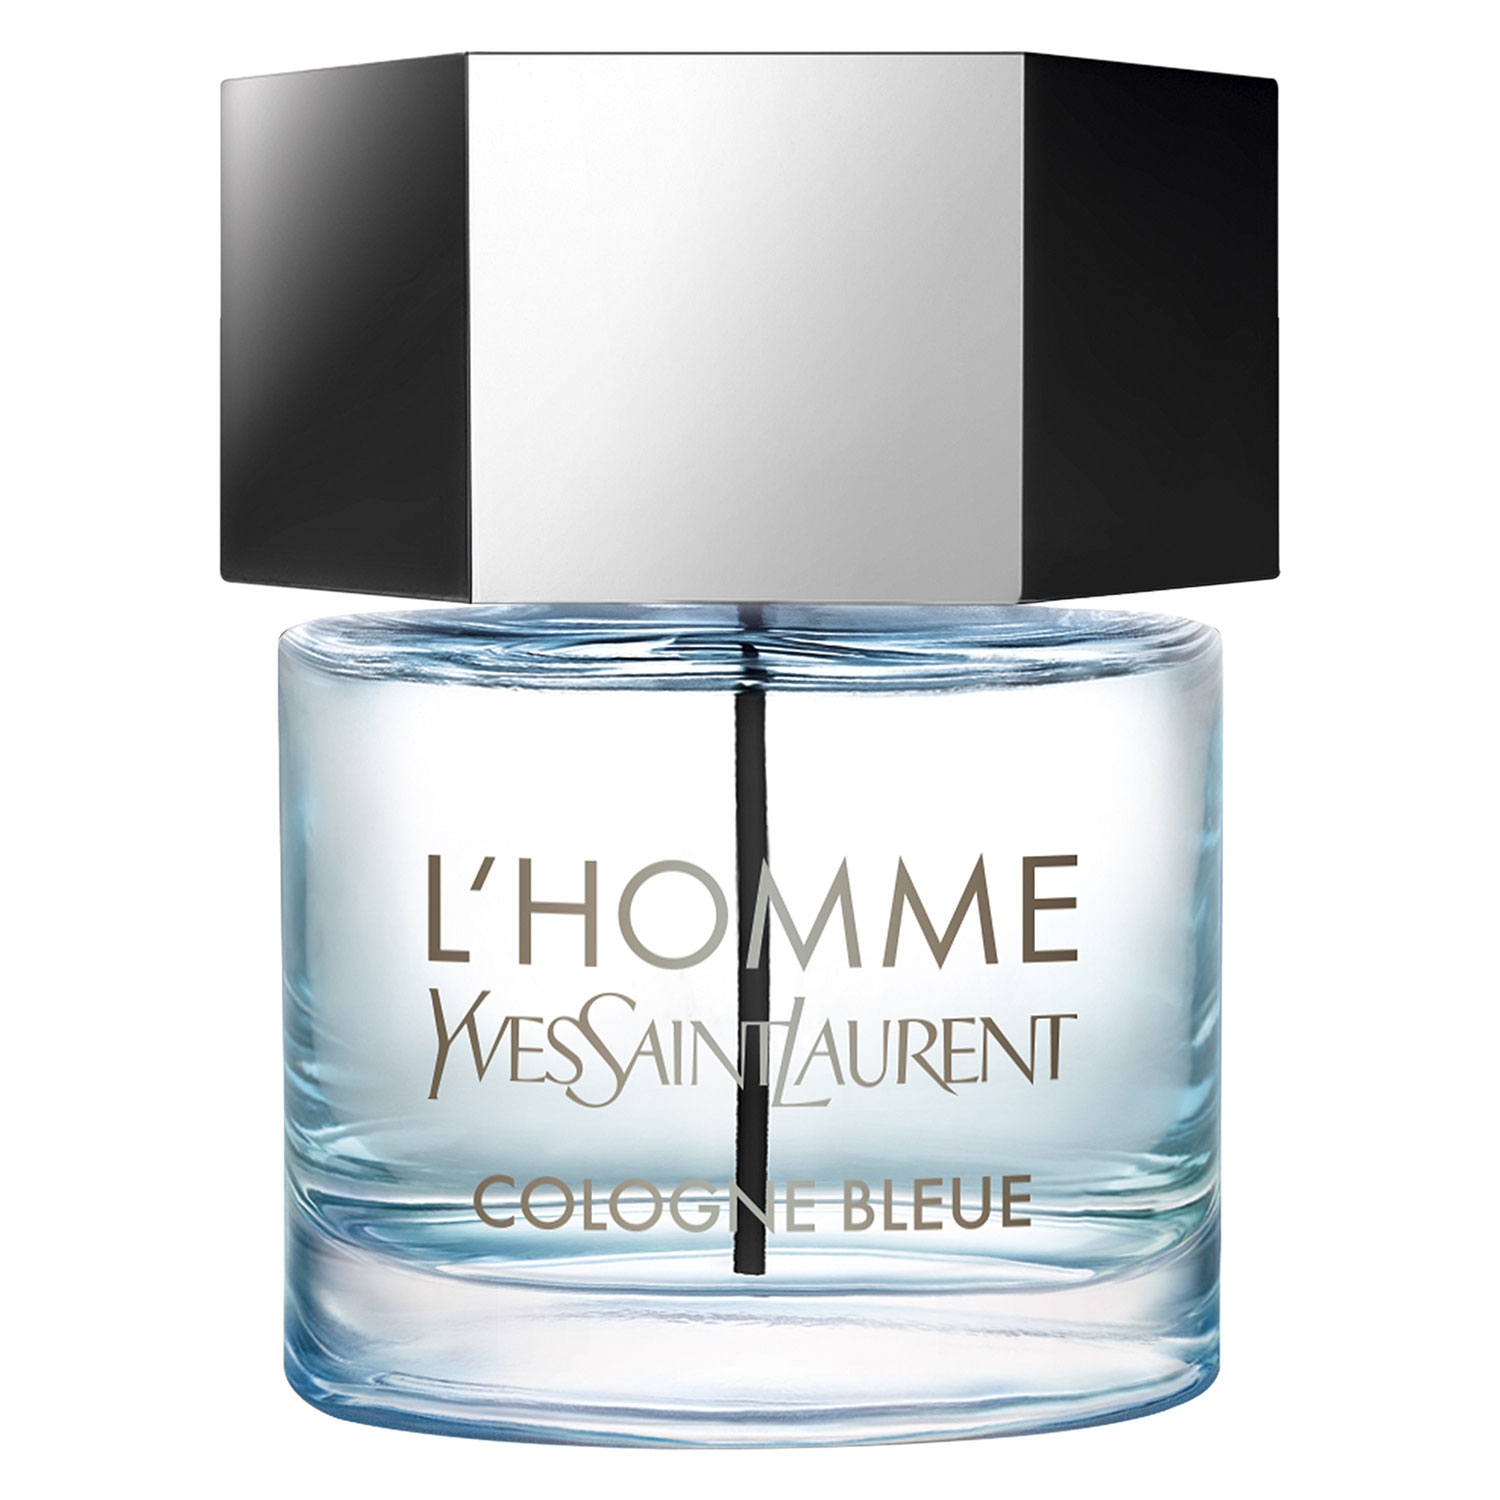 Produktbild von L'Homme - Cologne Bleue